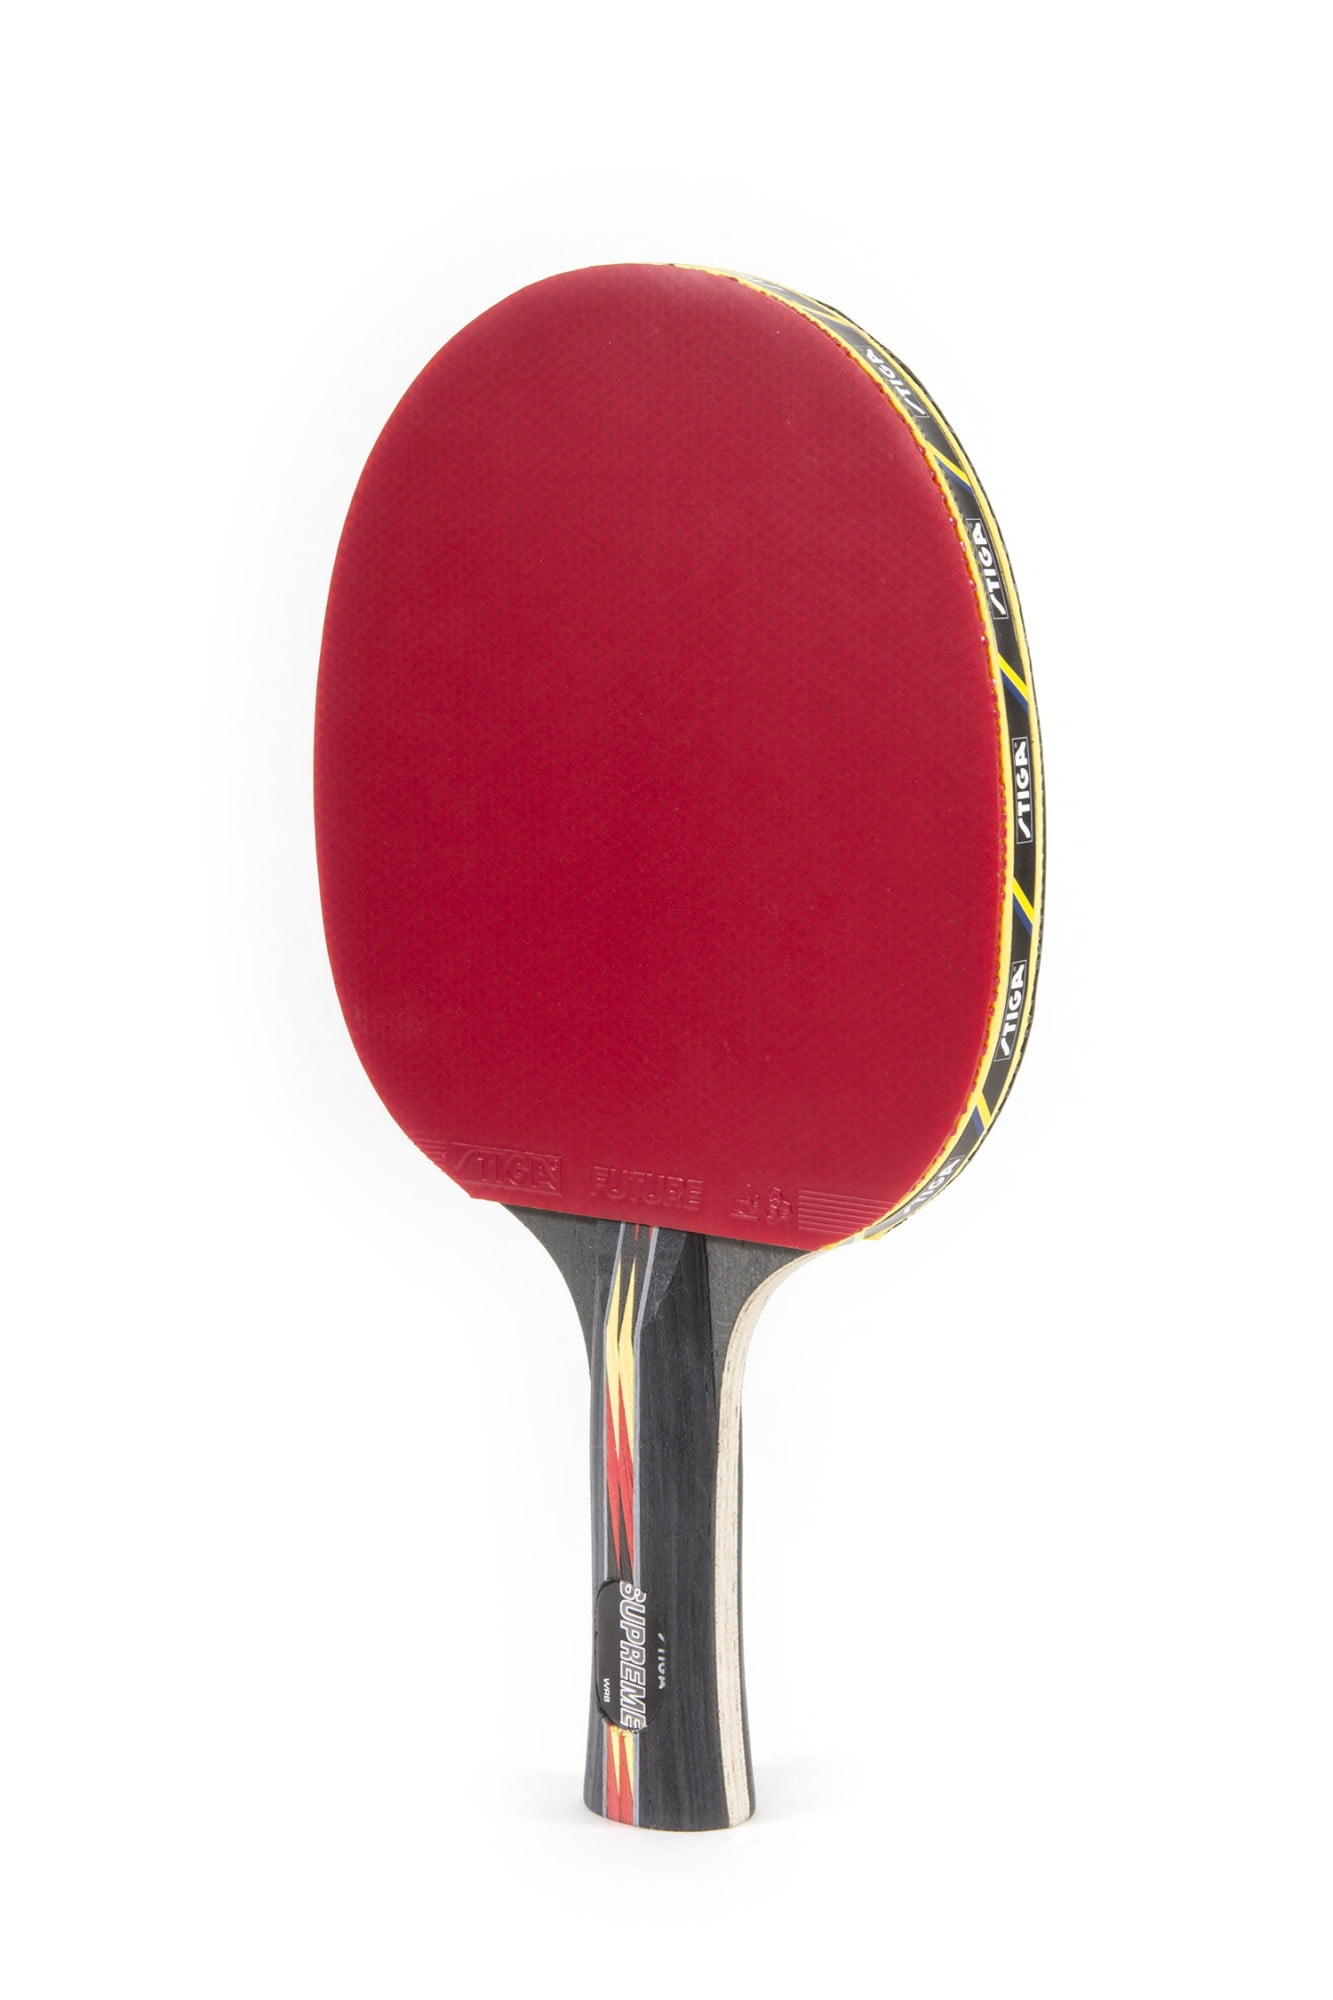 2 Paddles STIGA EVOLUTION Premium Ping Pong Table Tennis Paddle Racket NEW Lot 